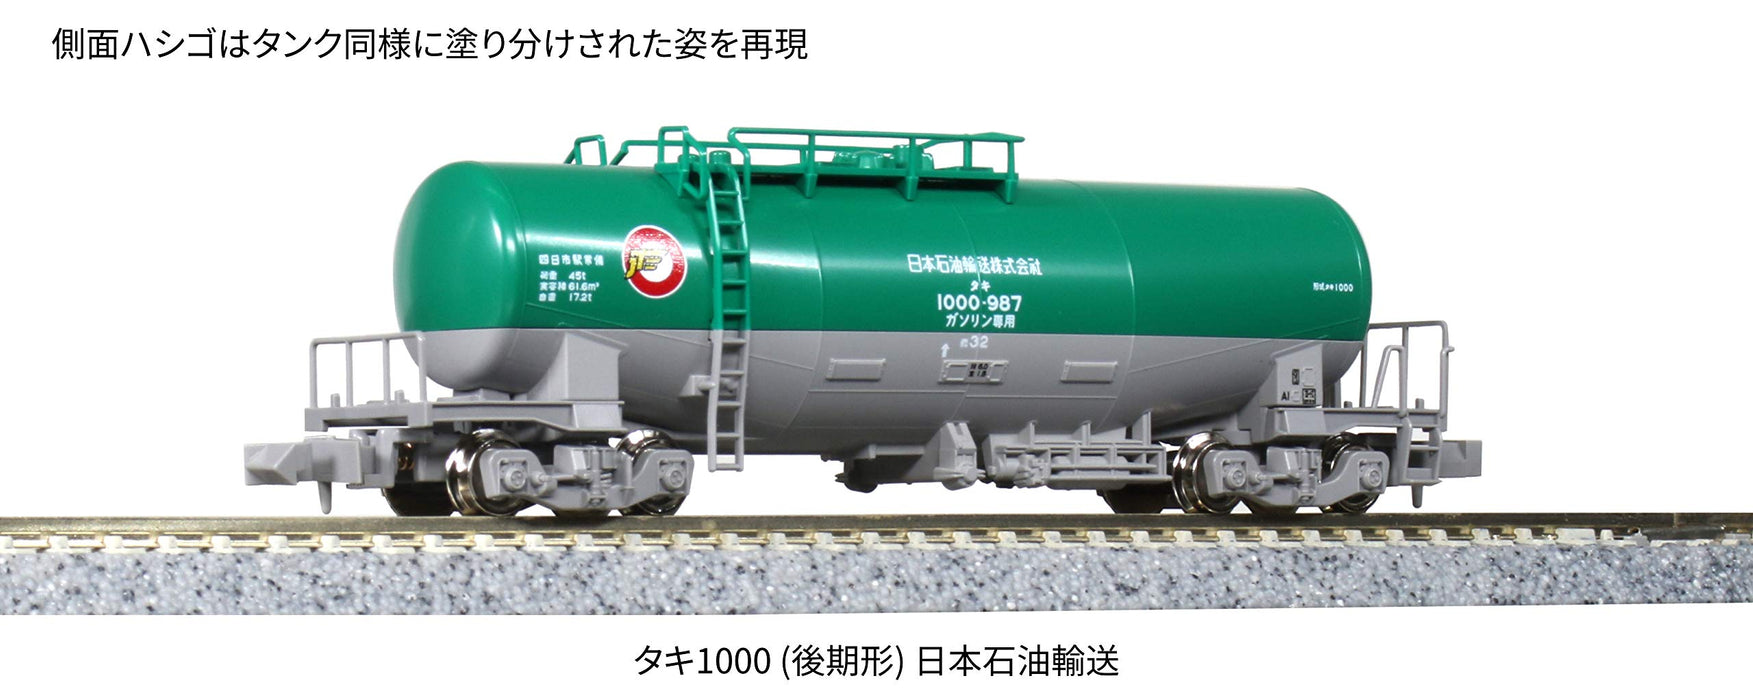 Kato N Gauge Taki 1000 Spät 8081 Nippon Öltransport Eisenbahn Güterwagen Modell